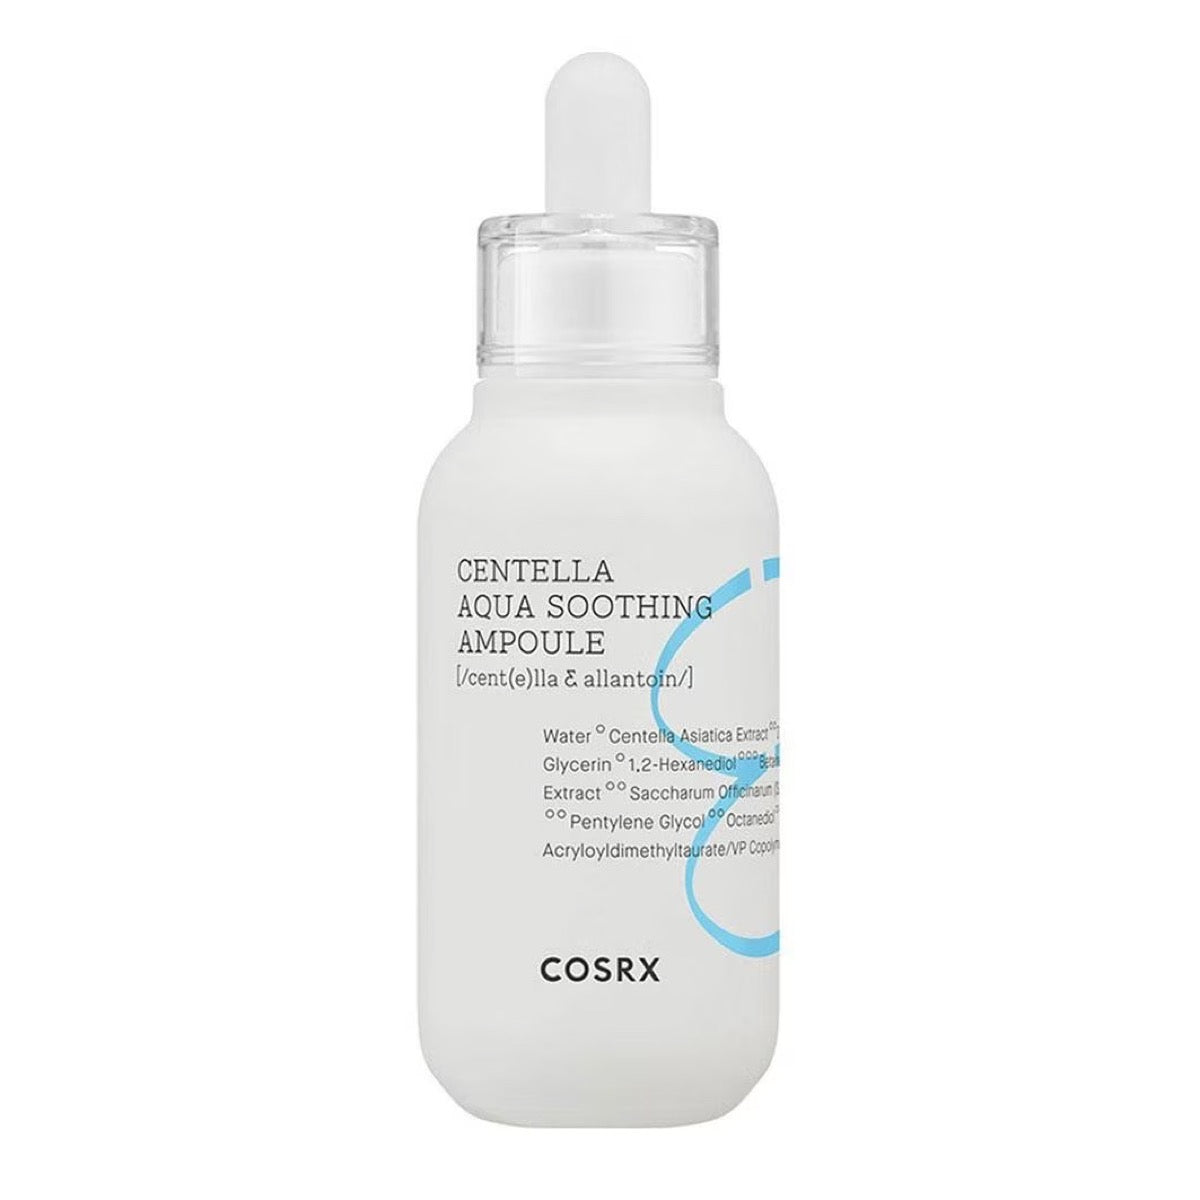 Centella Aqua Soothing Ampoule Cosrx